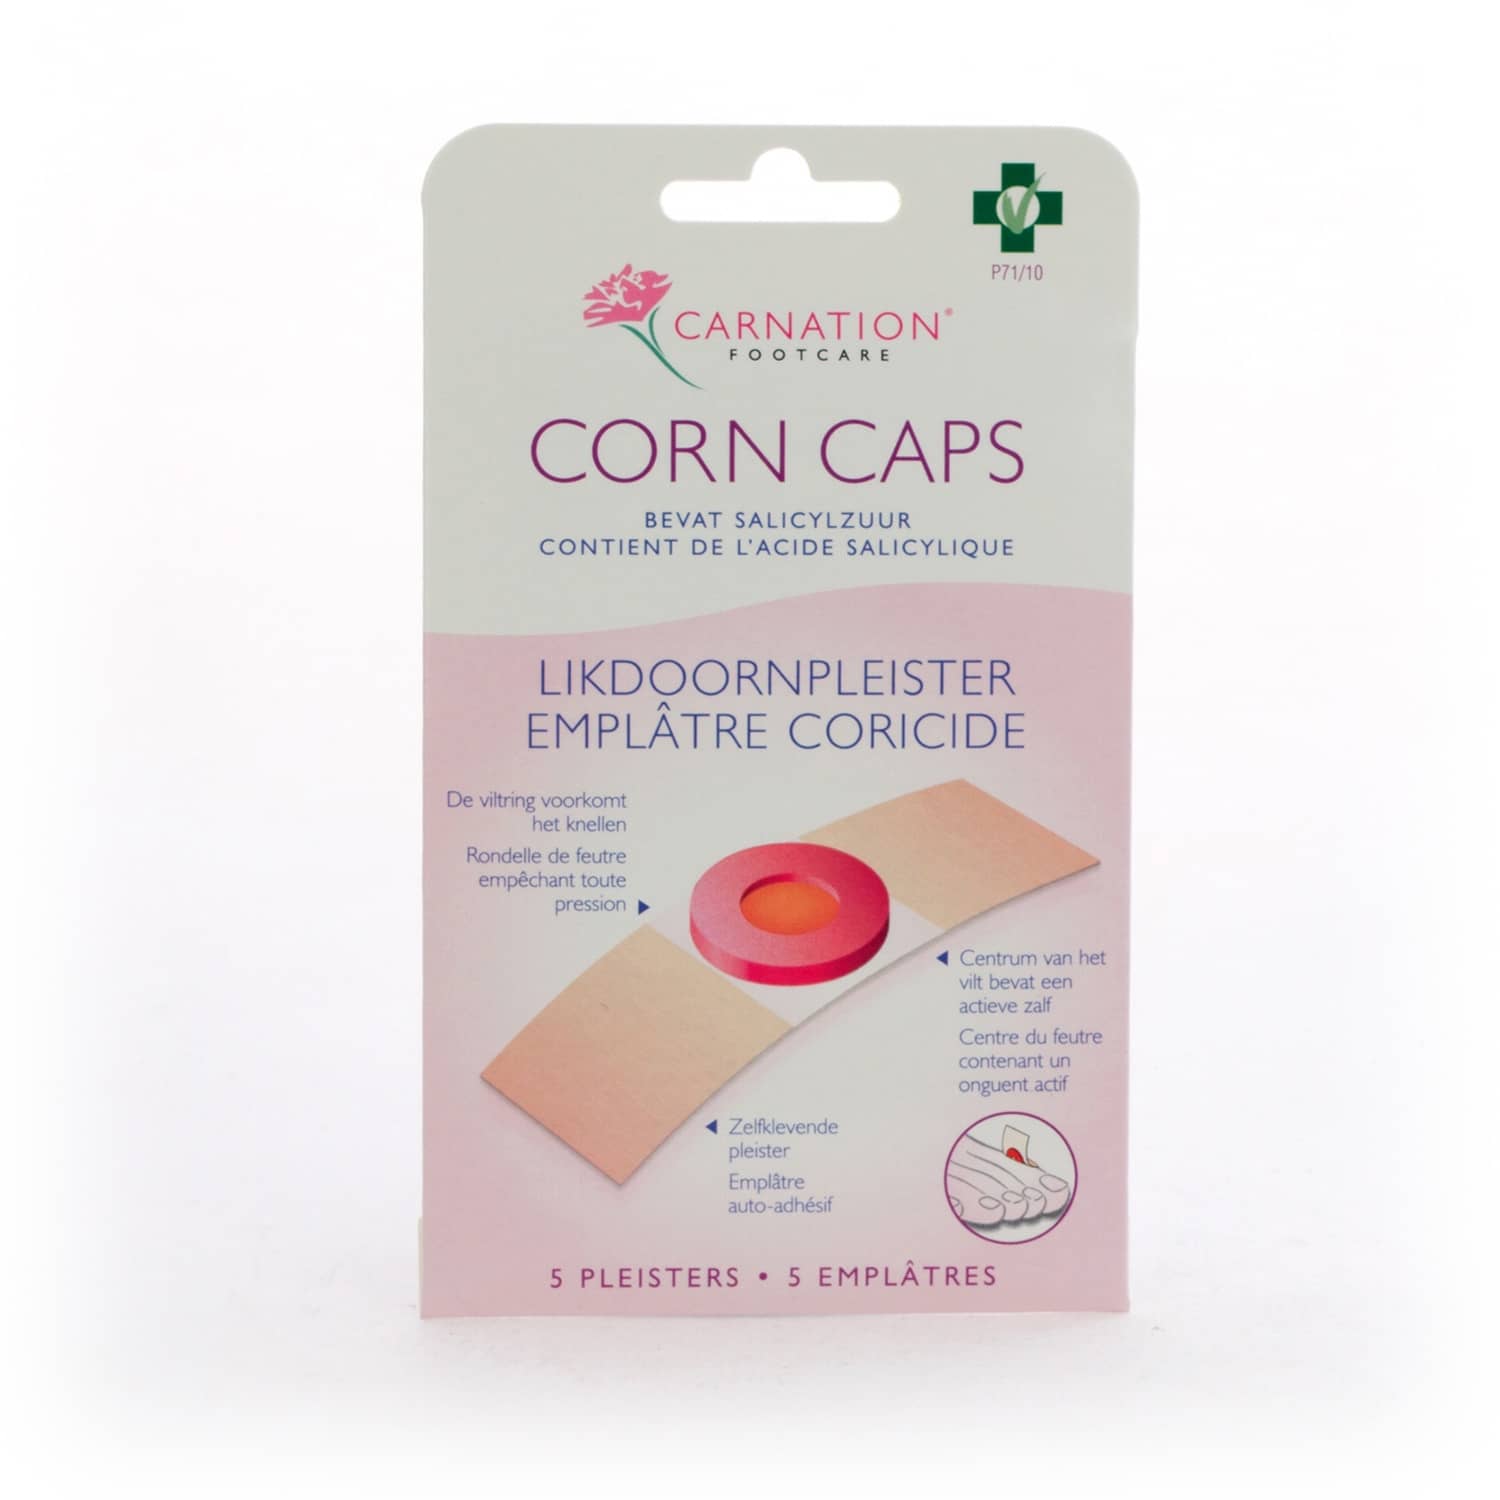 Carnation Carn Caps